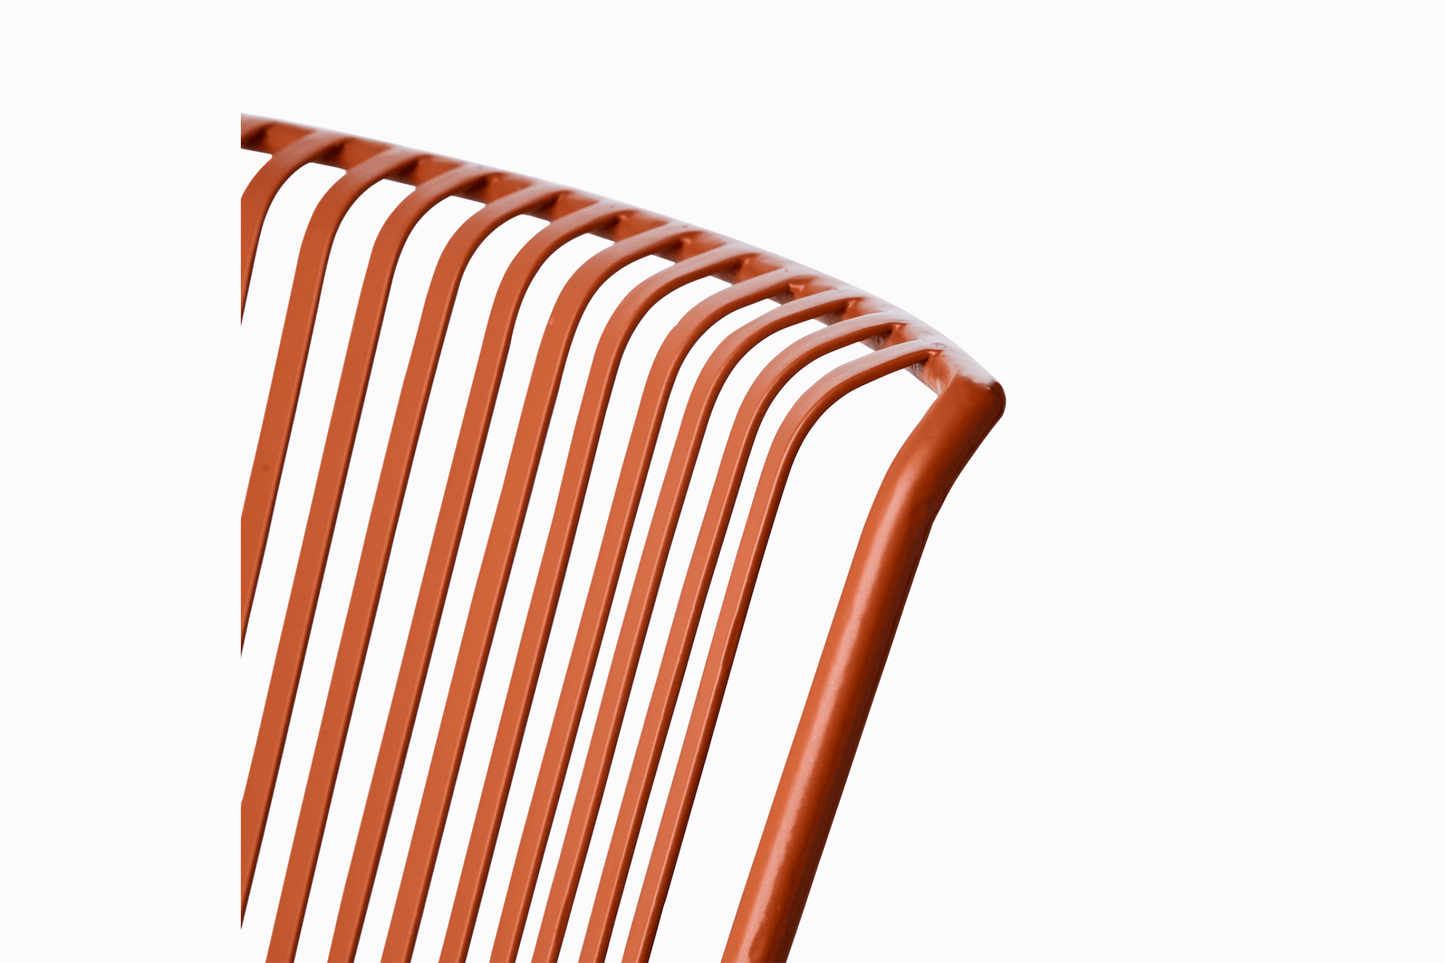 Amalfi Metal Dining Chair - Terracotta